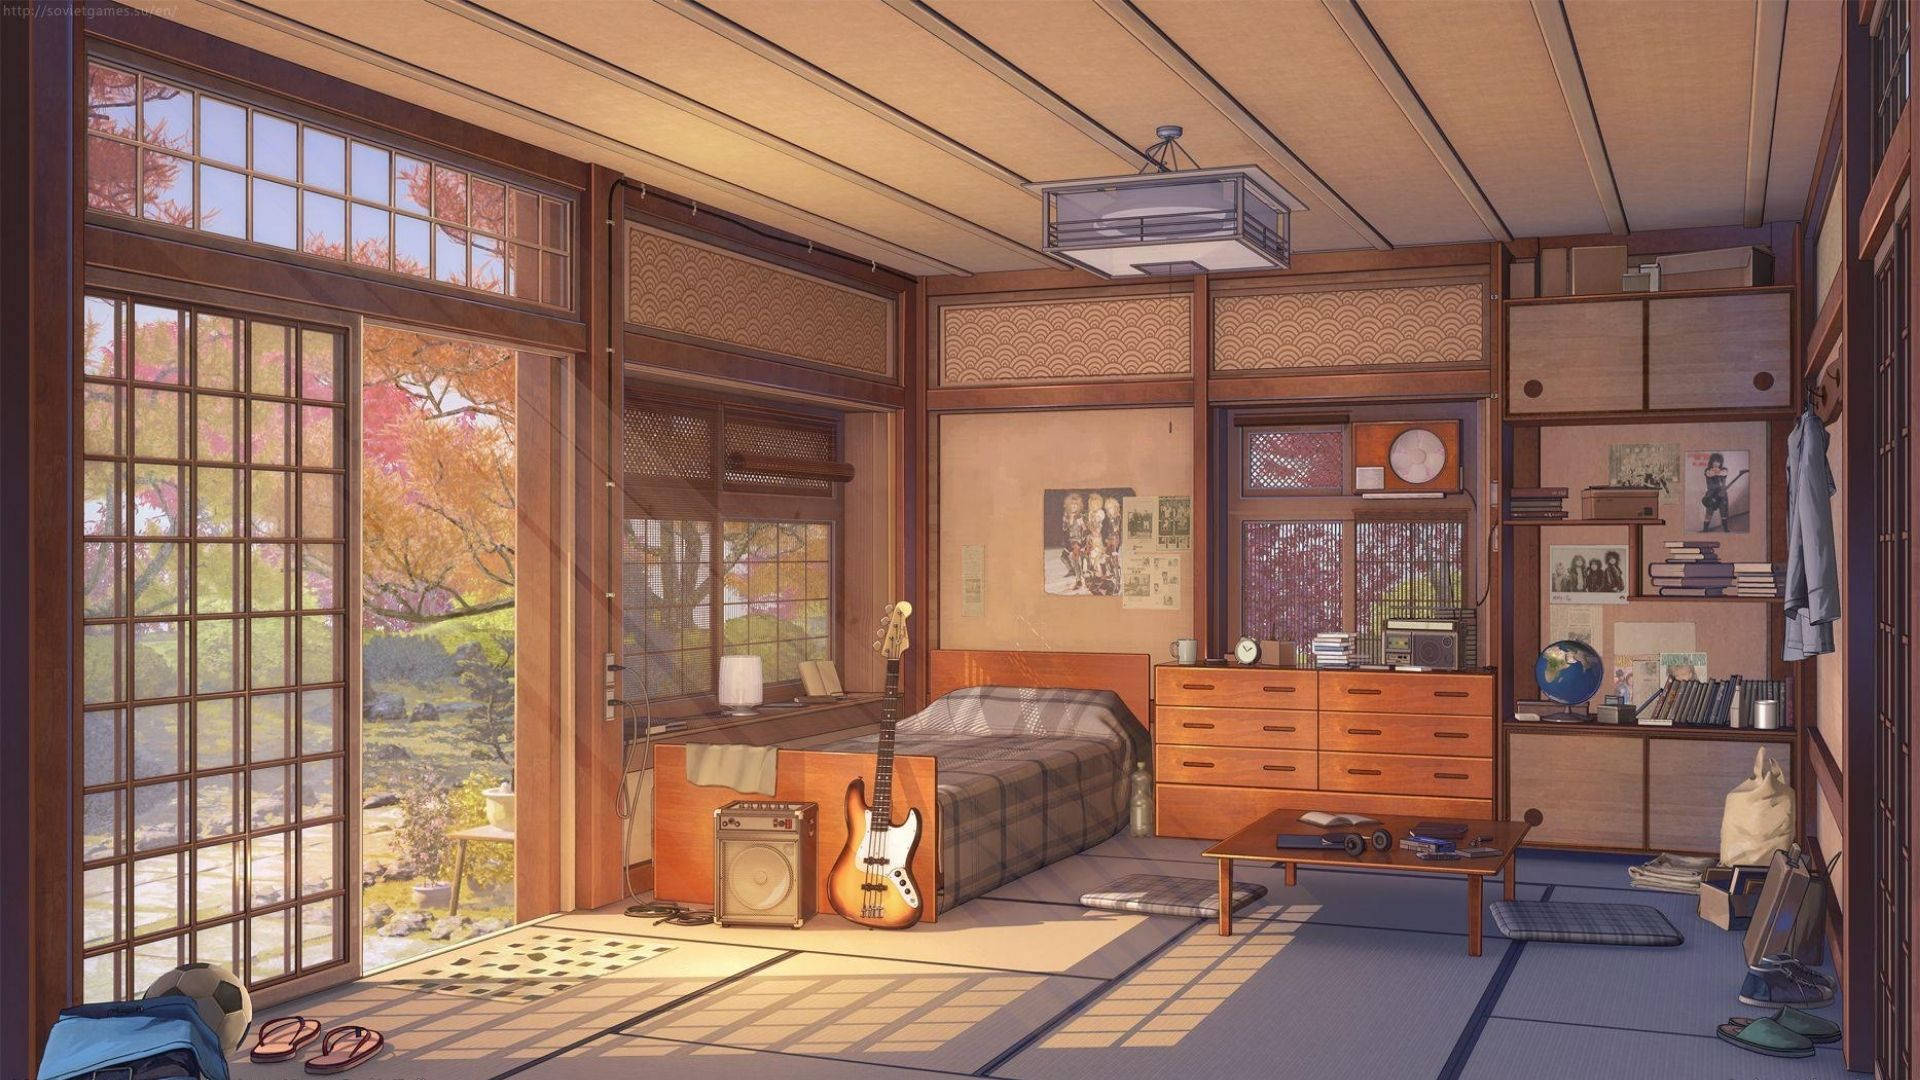 Musician Anime Room Background